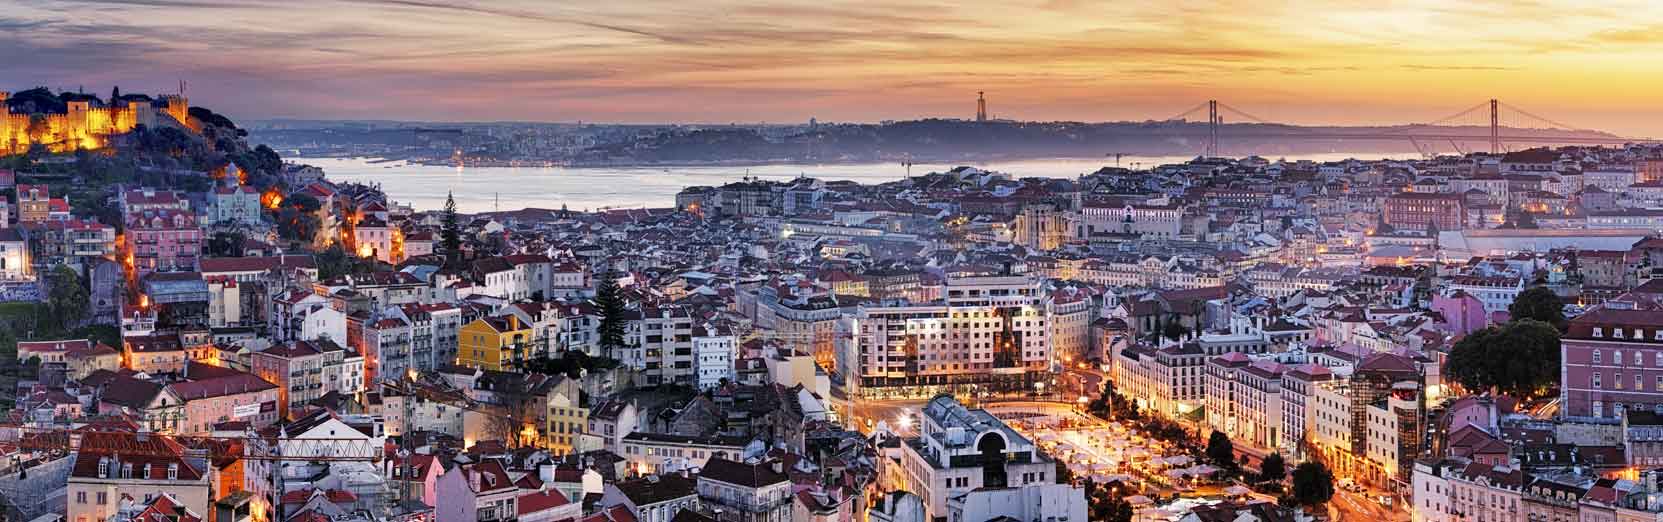 Lissabon oder Porto